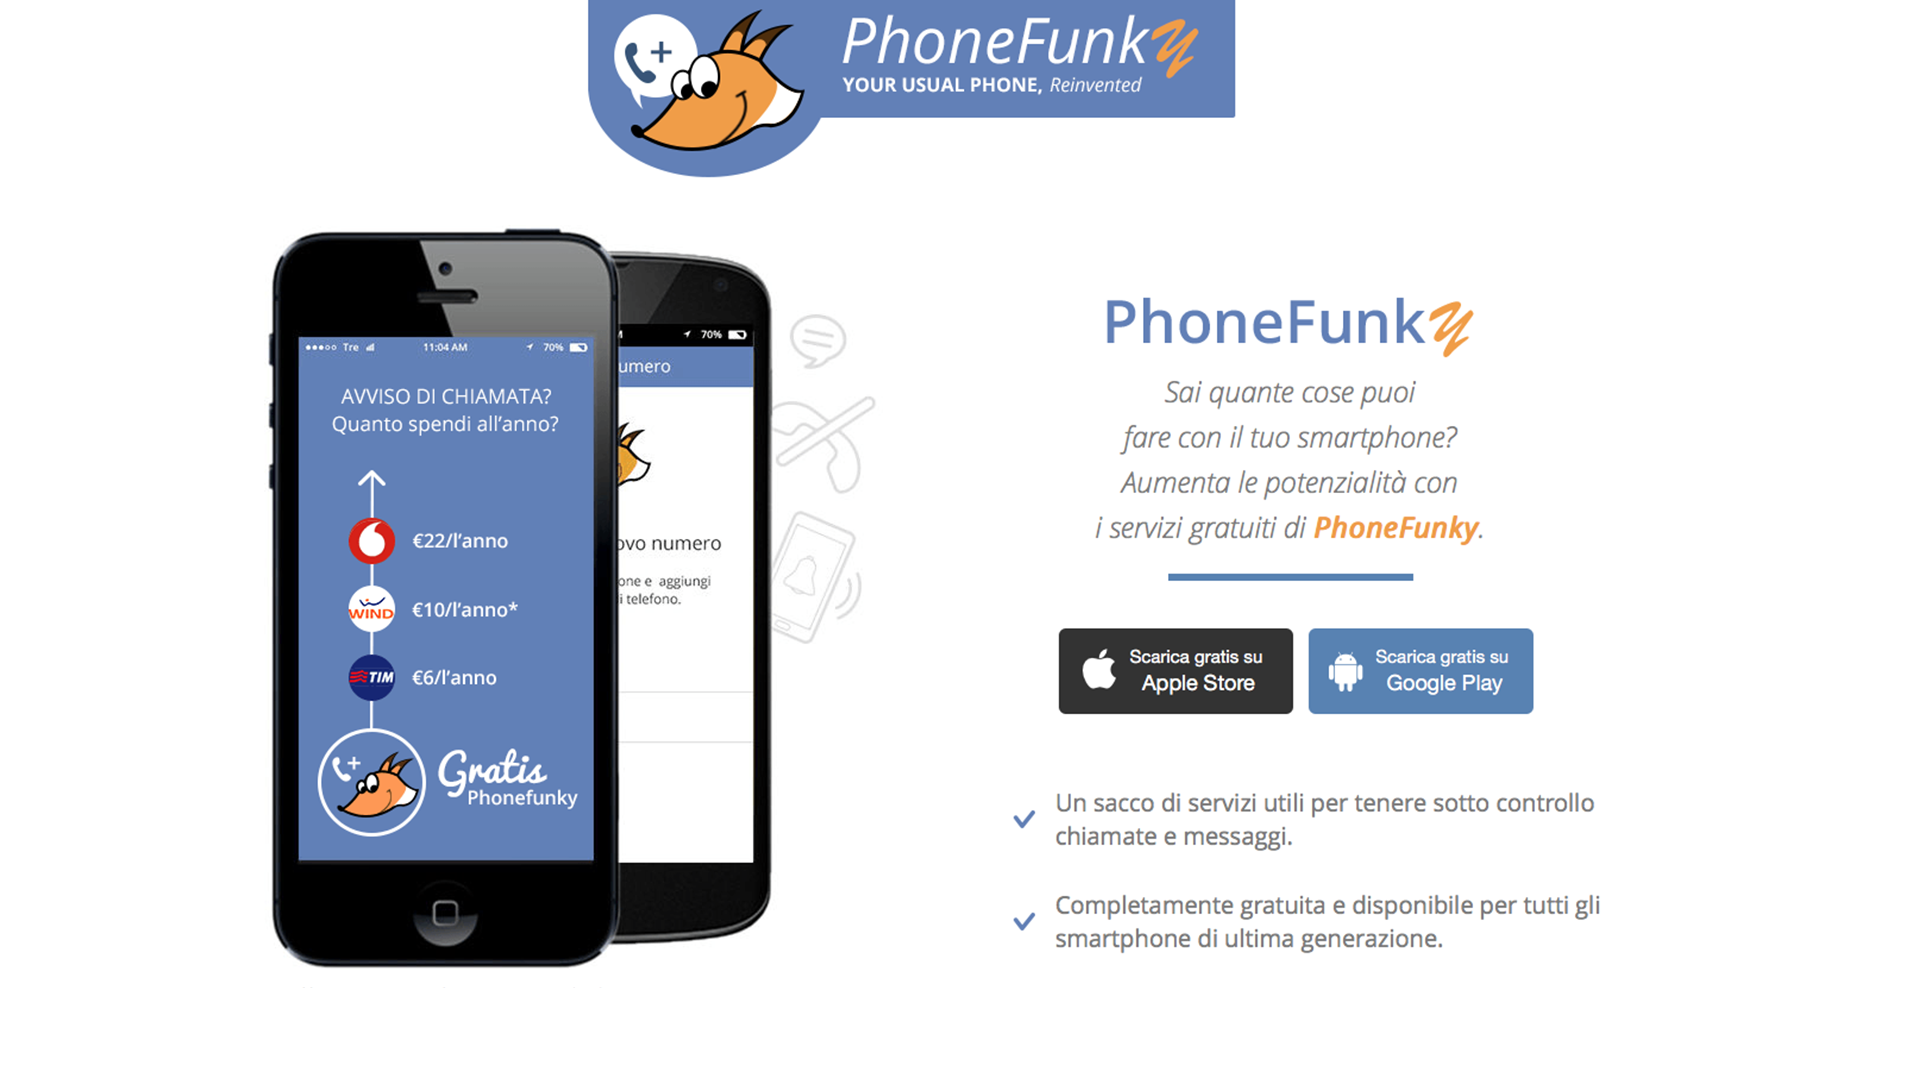 Avvisi di chiamata gratis con PhoneFunky